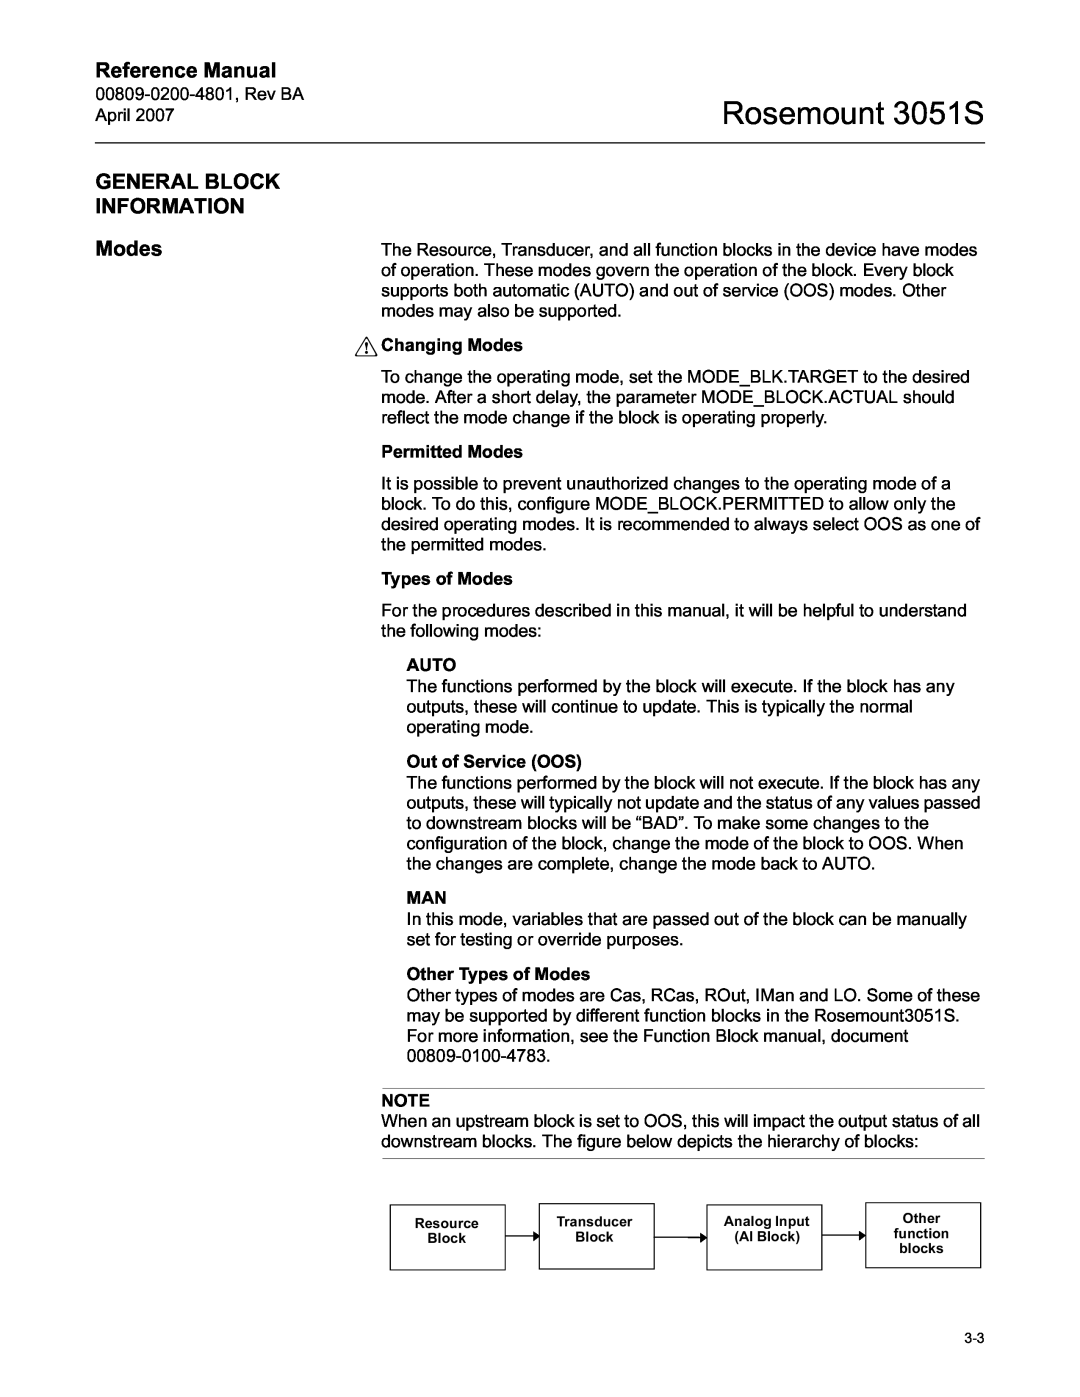 Emerson manual General Block Information, Modes, Rosemount 3051S, Reference Manual, Resource Block, Transducer Block 